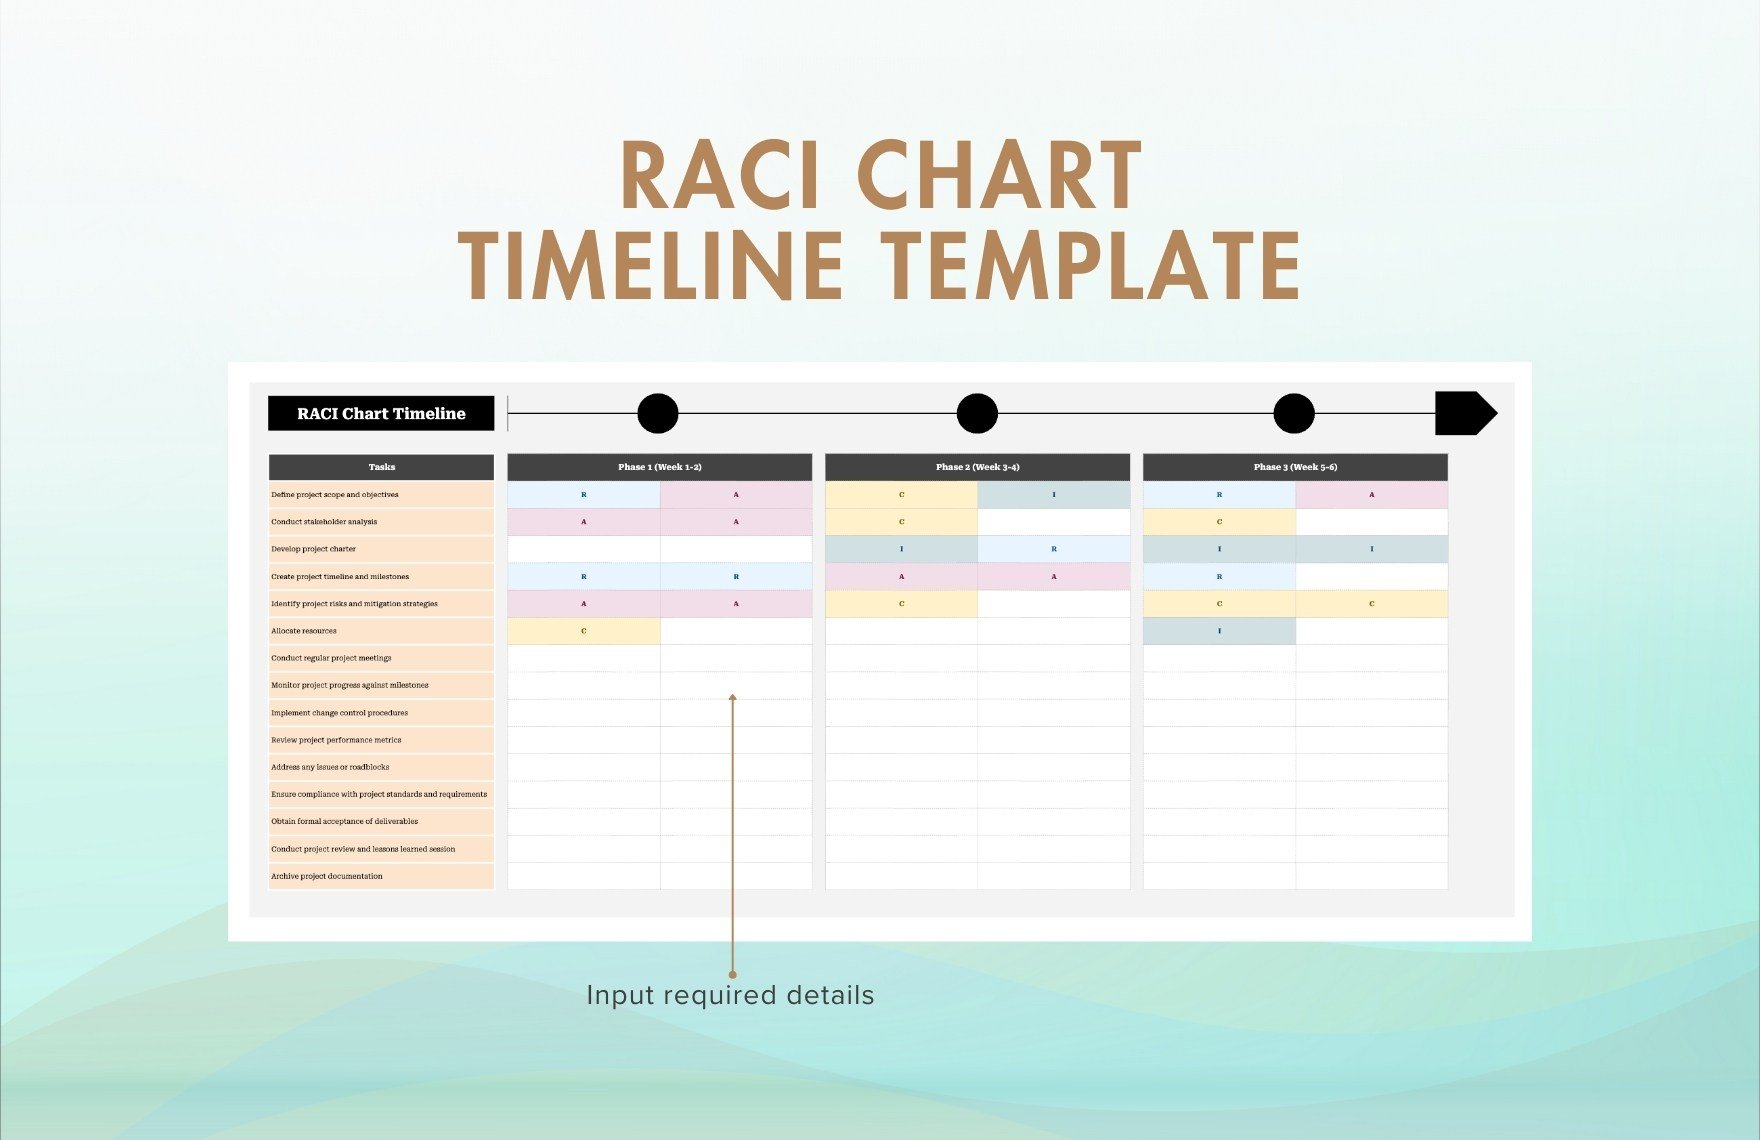 RACI Chart Timeline Template